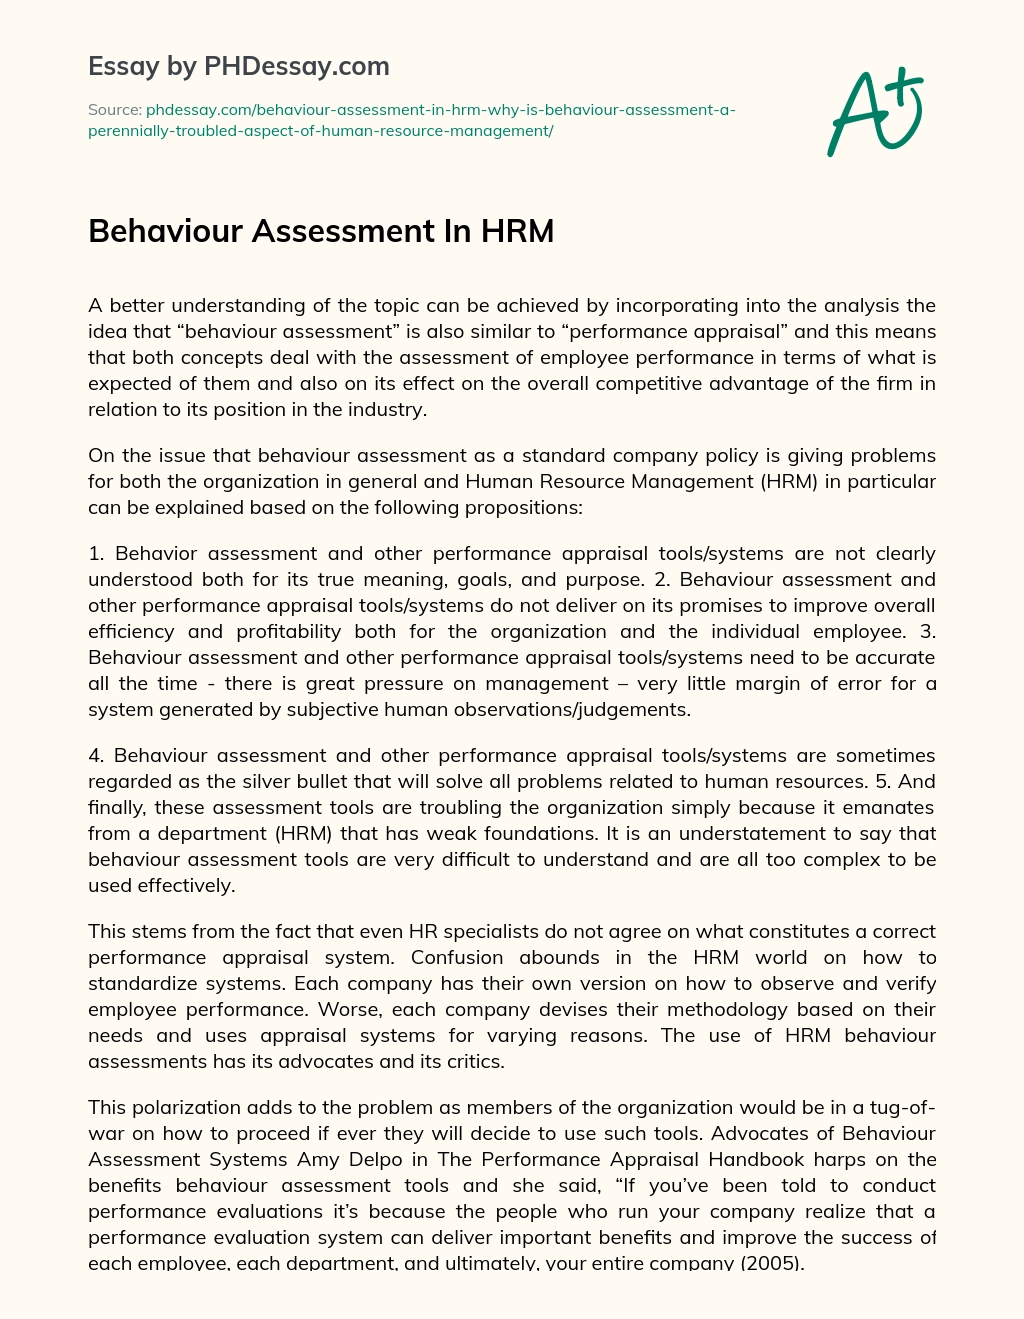 Behaviour Assessment In HRM essay